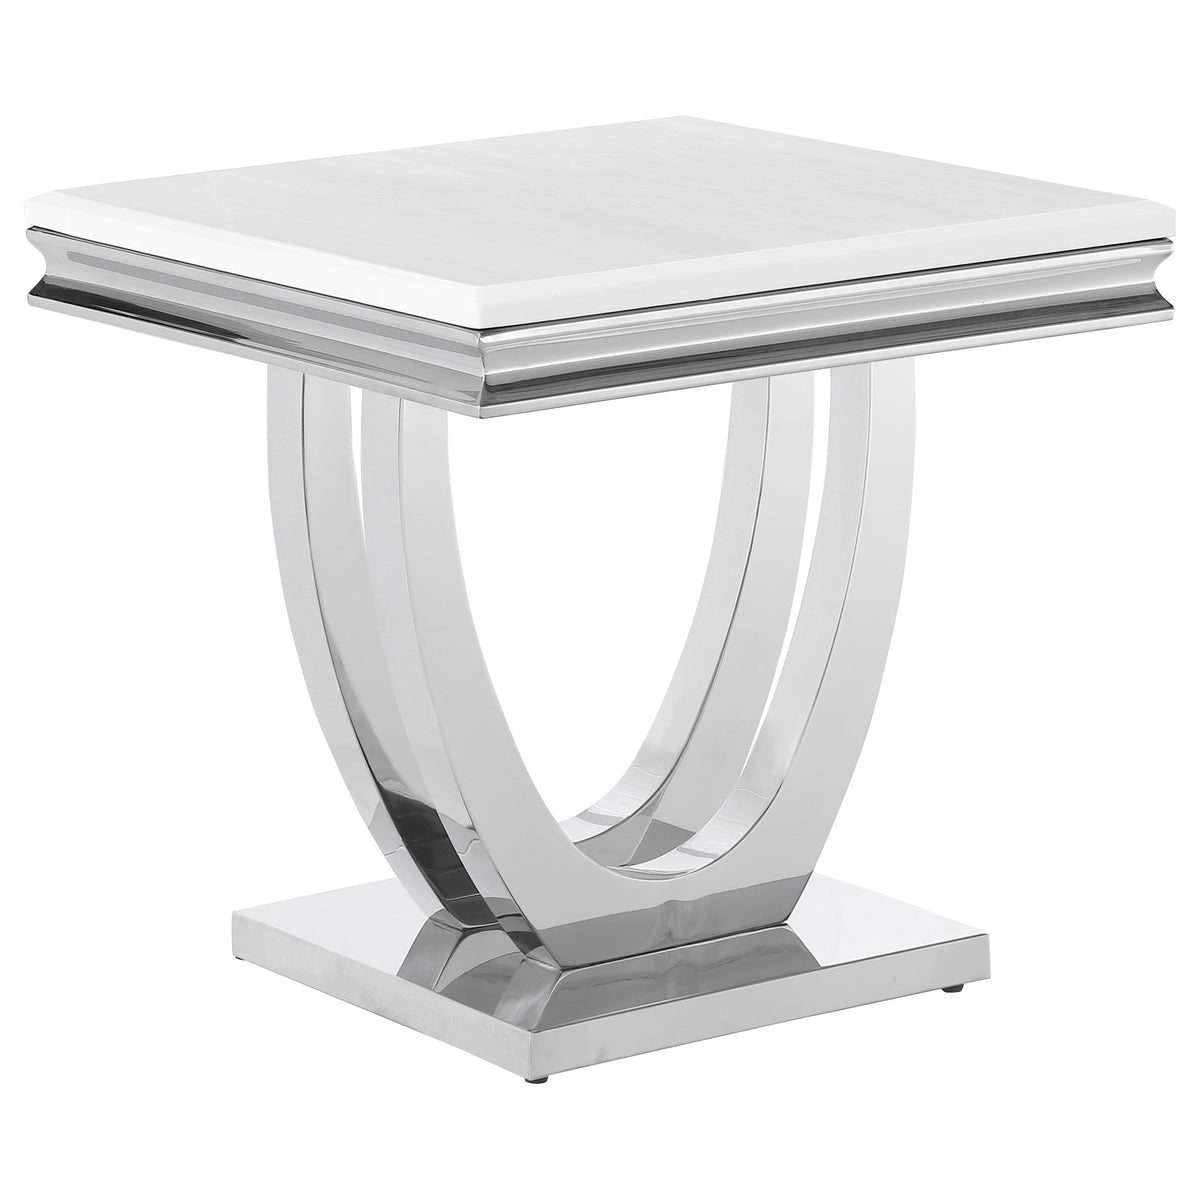 Kerwin U-base Square End Table White and Chrome  Half Price Furniture